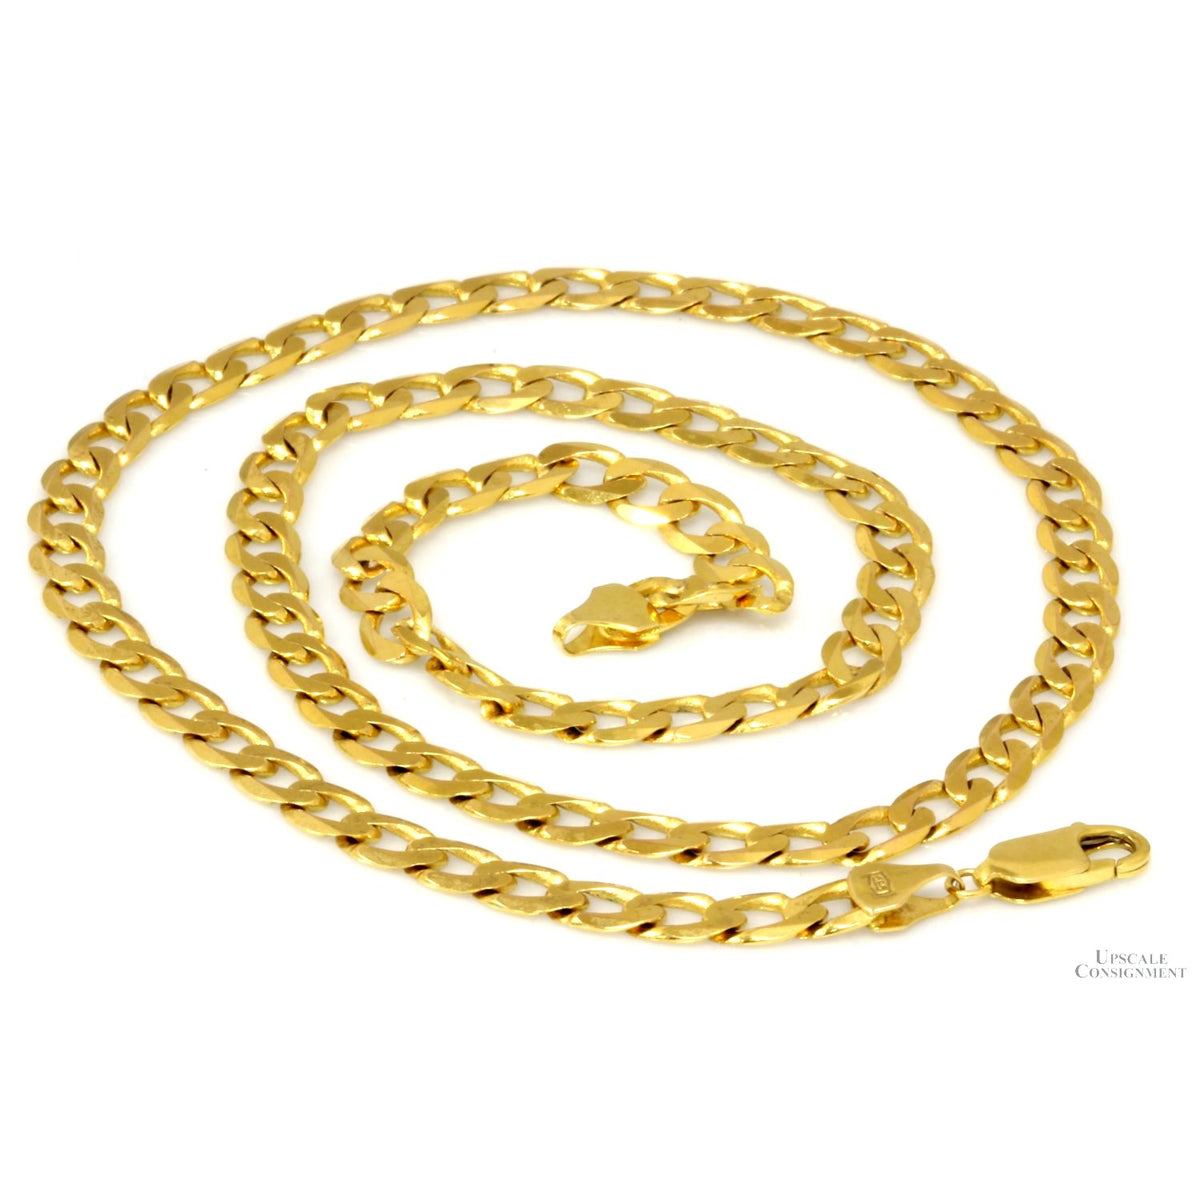 6mm(w) x 22"(l) 14K Yellow Gold Flat Curb Chain Necklace